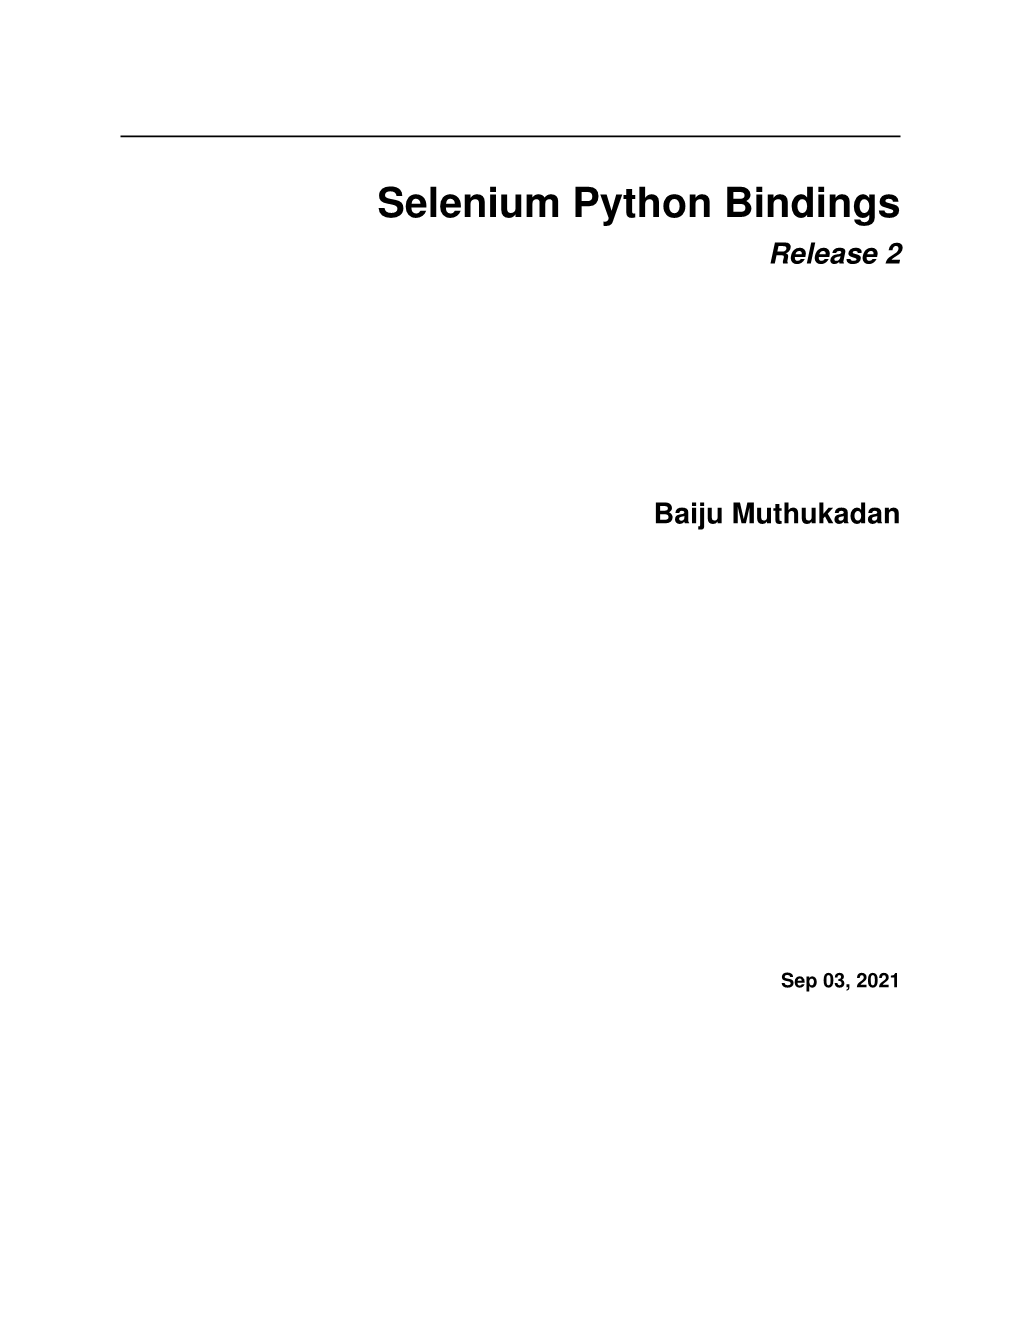 Selenium Python Bindings Release 2